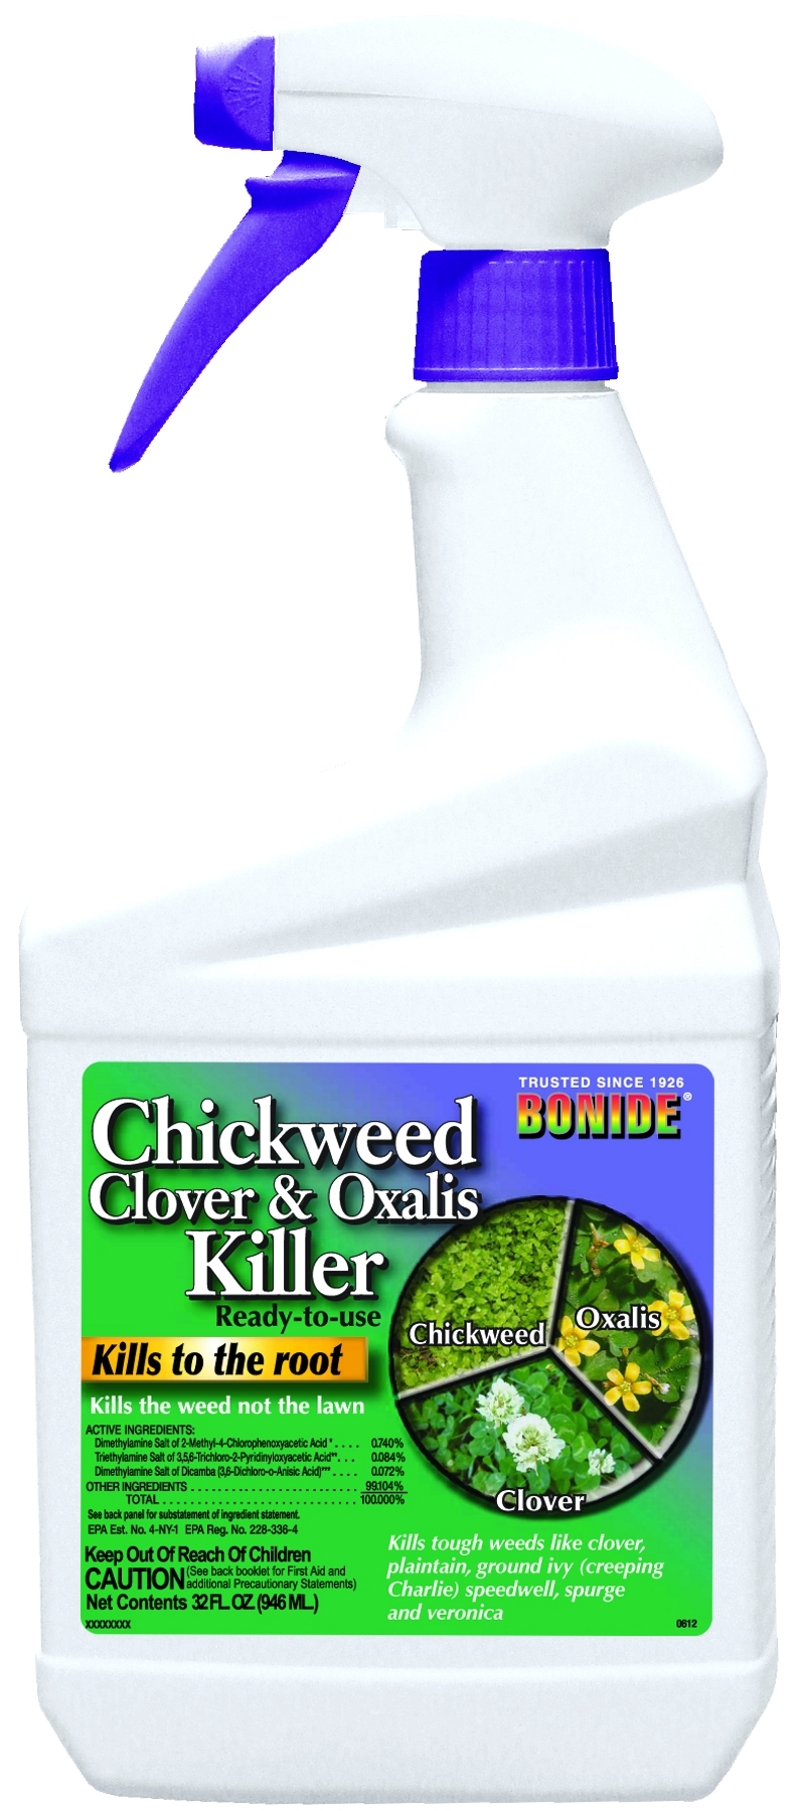 Bonide 612 Chickweed Clover & Oxalis Killer Lawn Fertilizer 16 fl oz